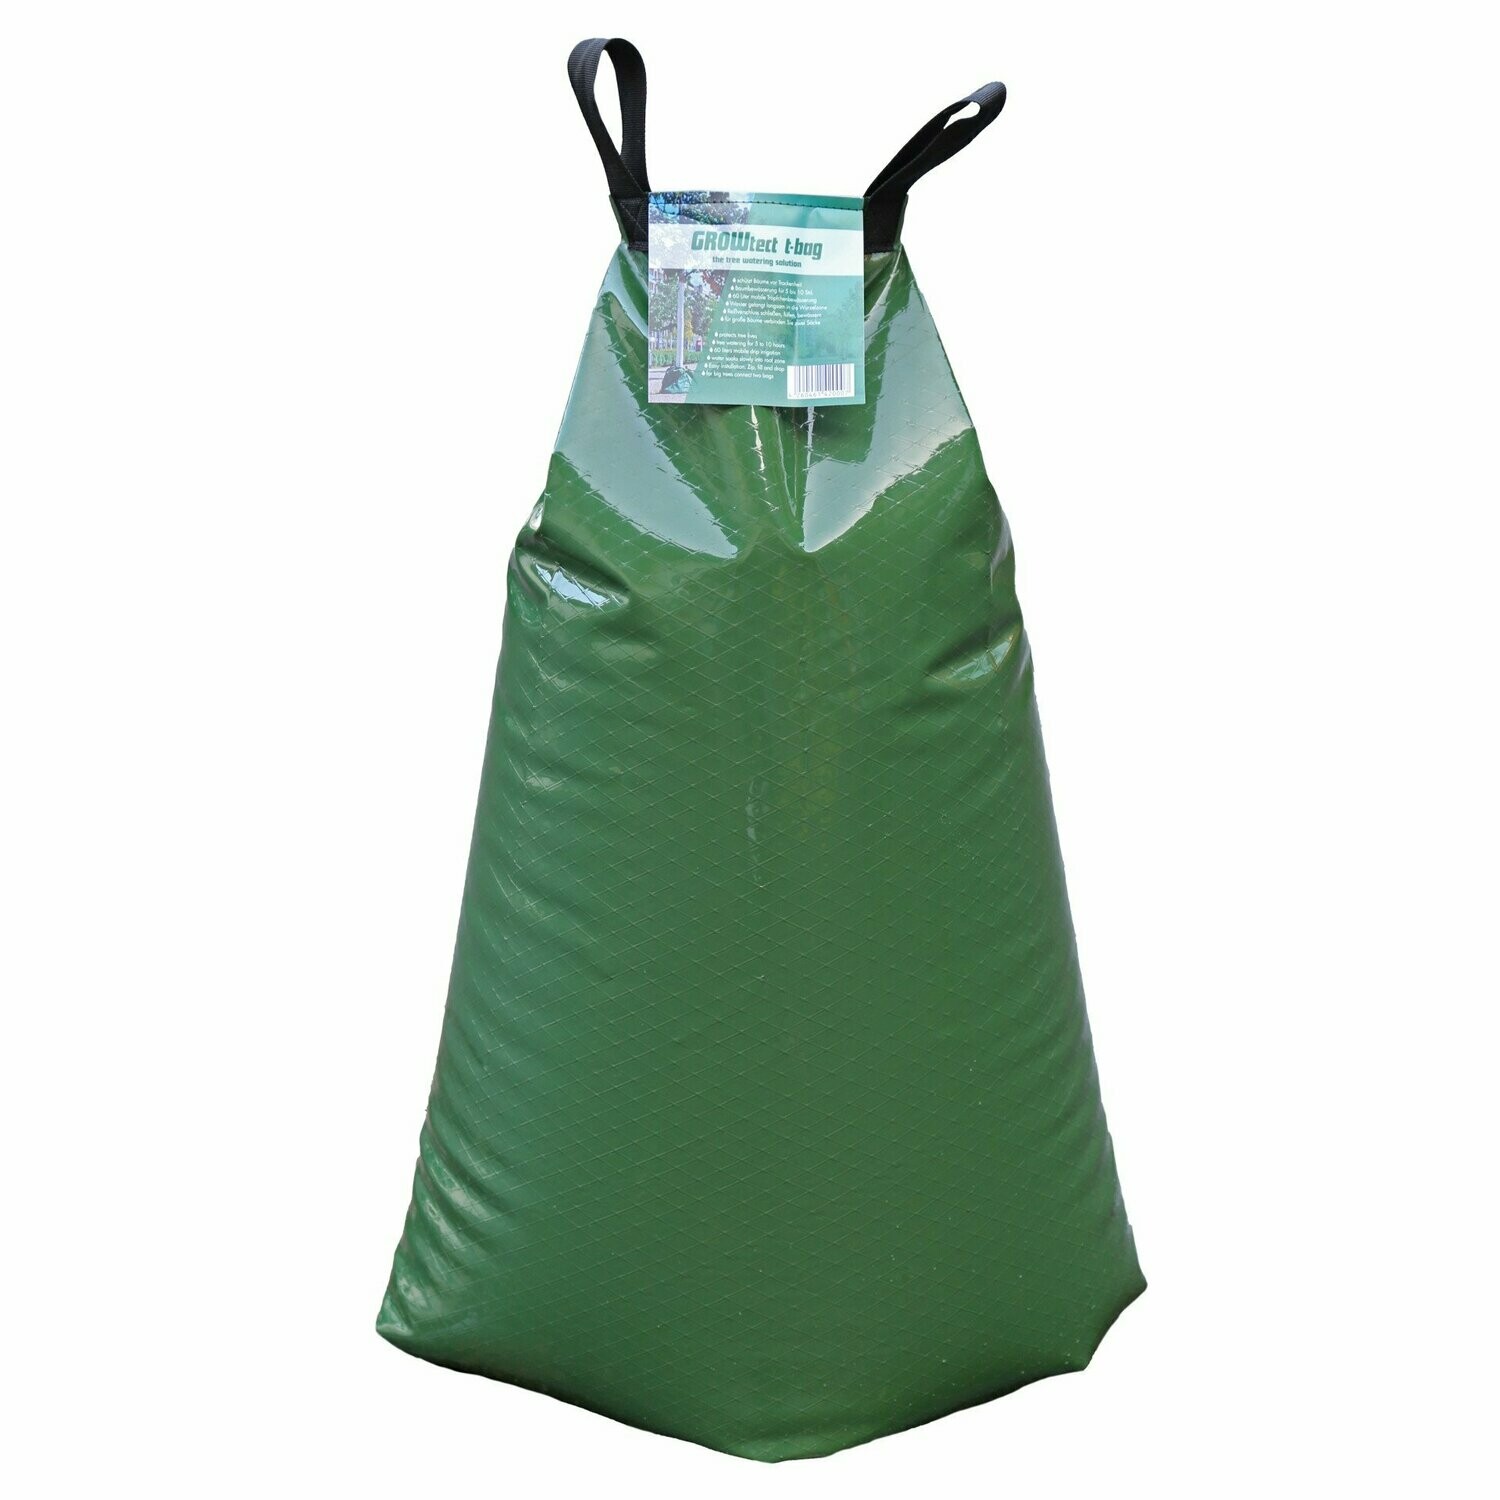 T-bag Drip Irrigation Bag